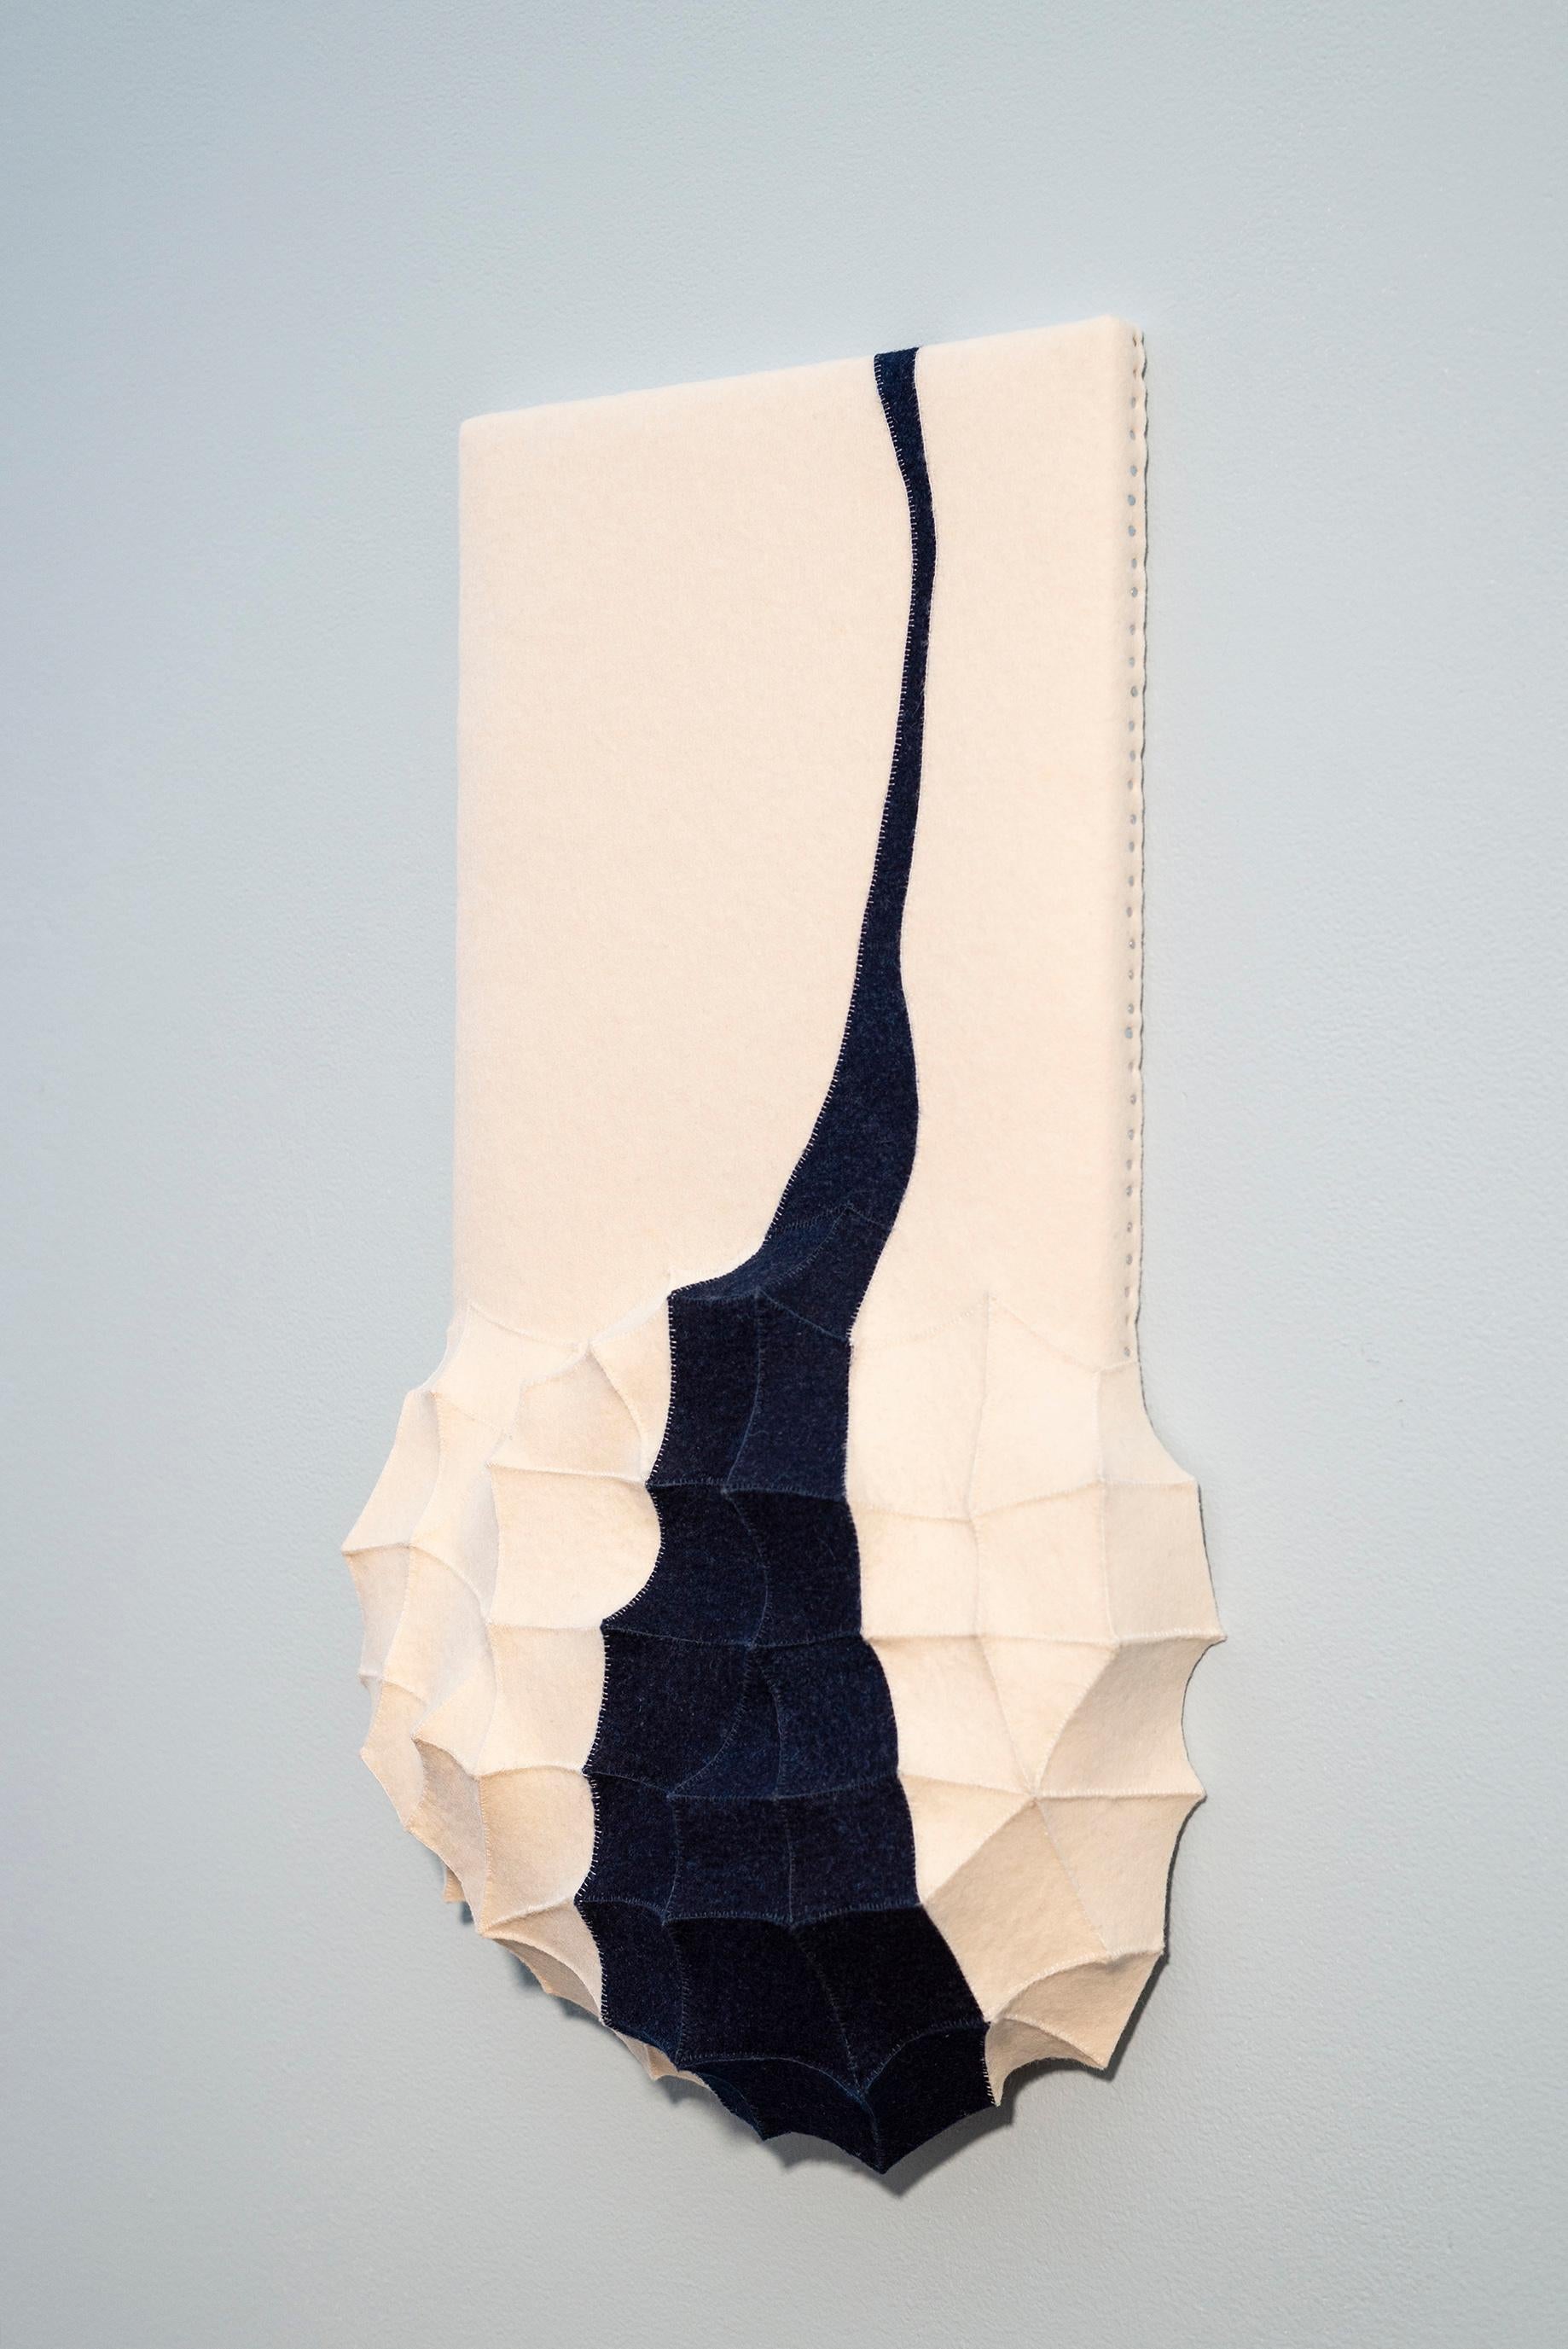 Sansu 1 - blue, white, 3D, biomorphic, abstract, industrial felt wall sculpture - Sculpture by Chung-Im Kim